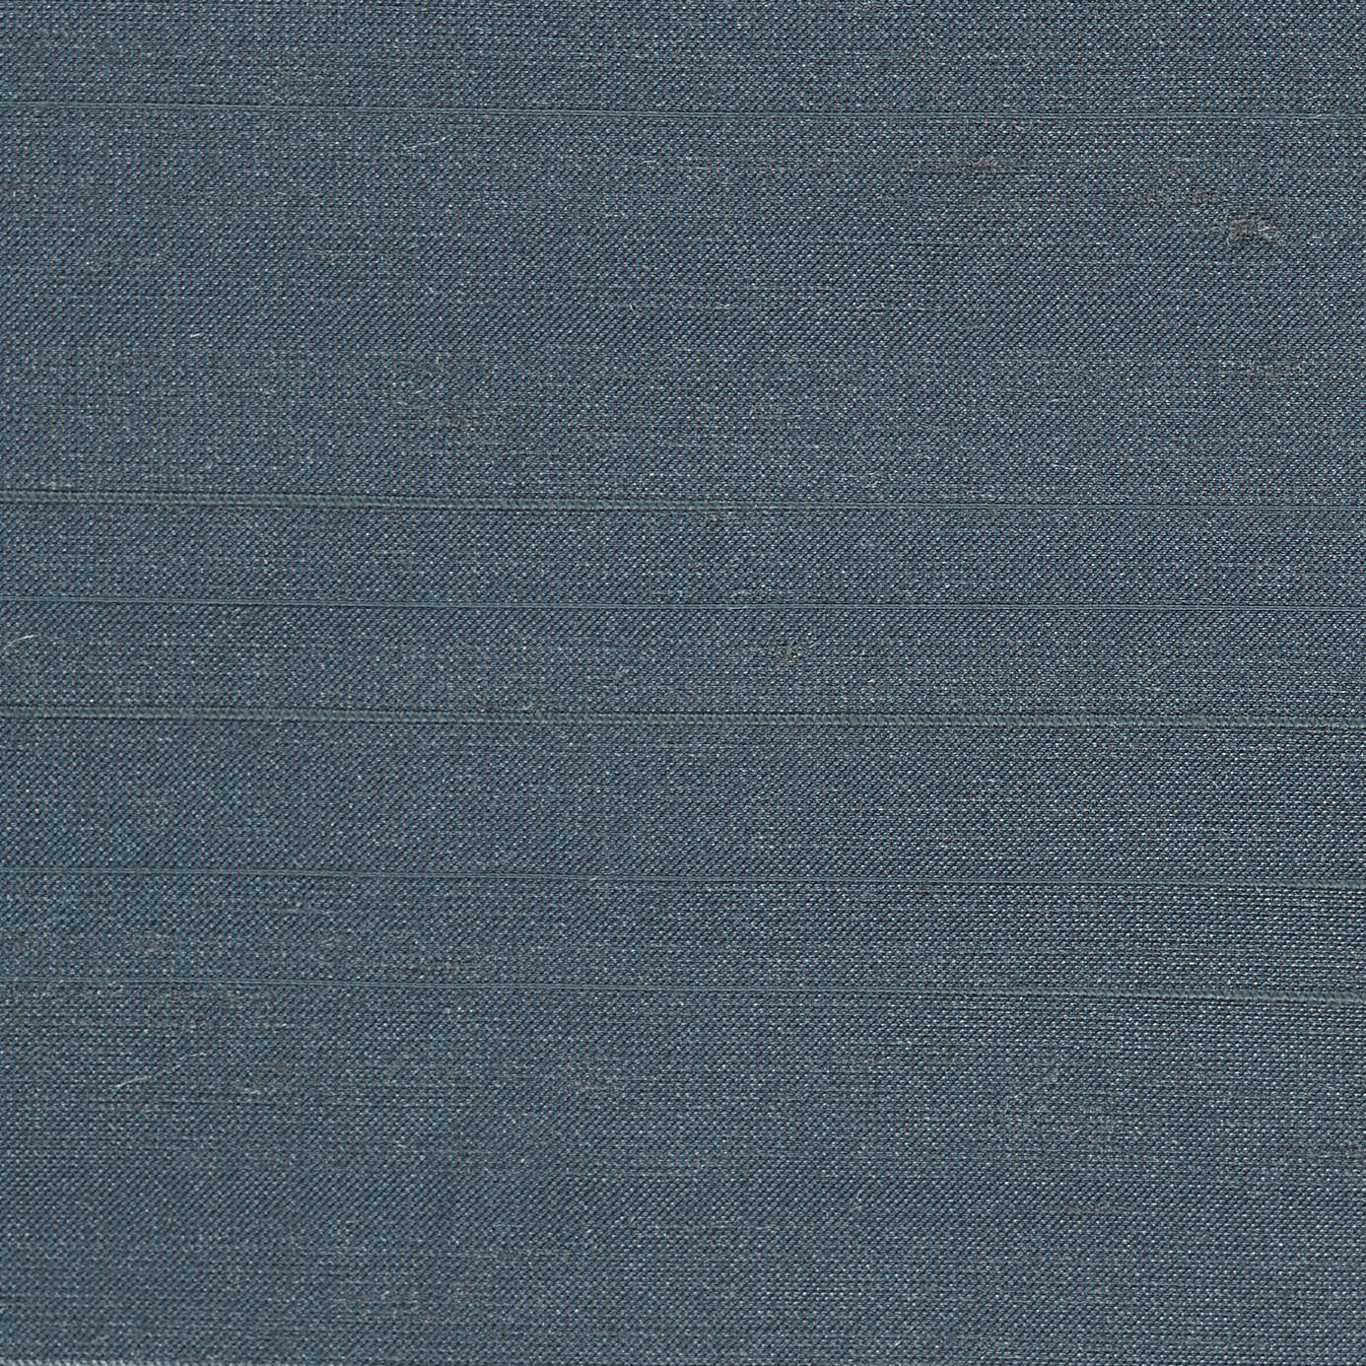 Deflect Fabric by Harlequin - HPOL440591 - Denim